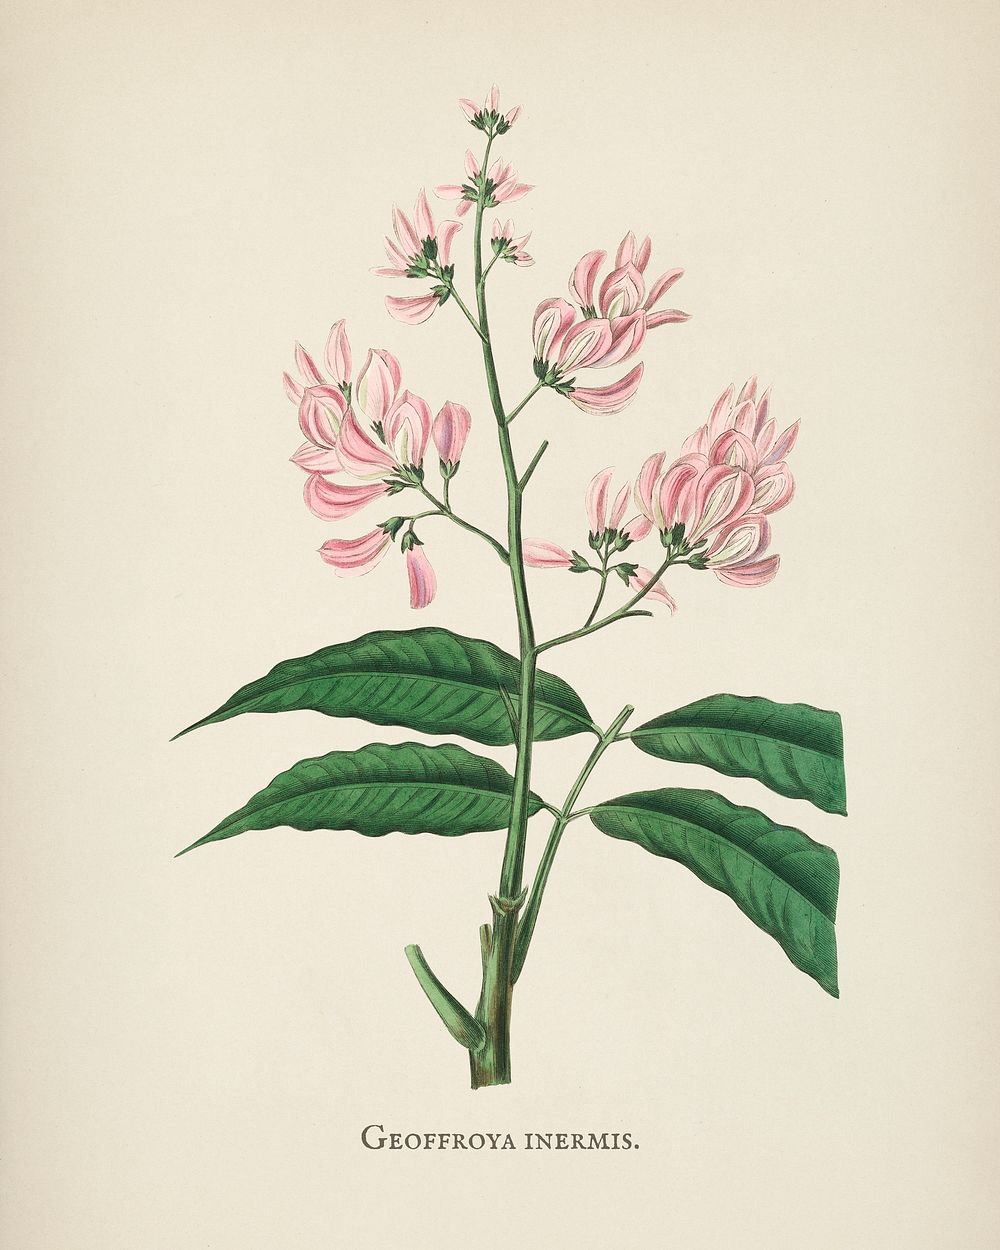 Geoffroya inermis illustration from Medical Botany (1836) by John Stephenson and James Morss Churchill.